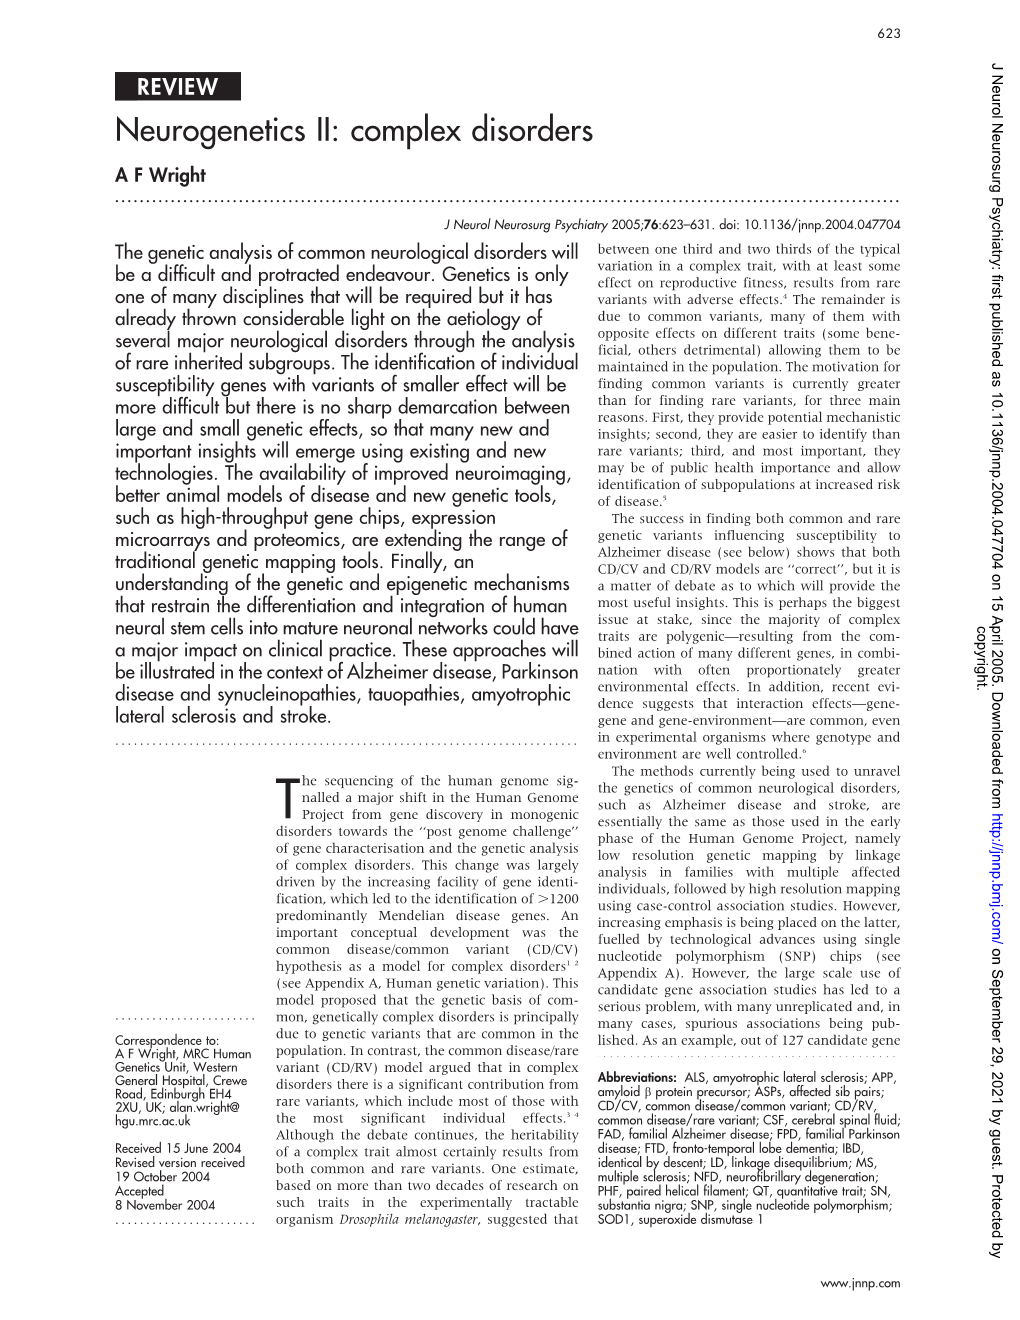 Neurogenetics II: Complex Disorders a F Wright